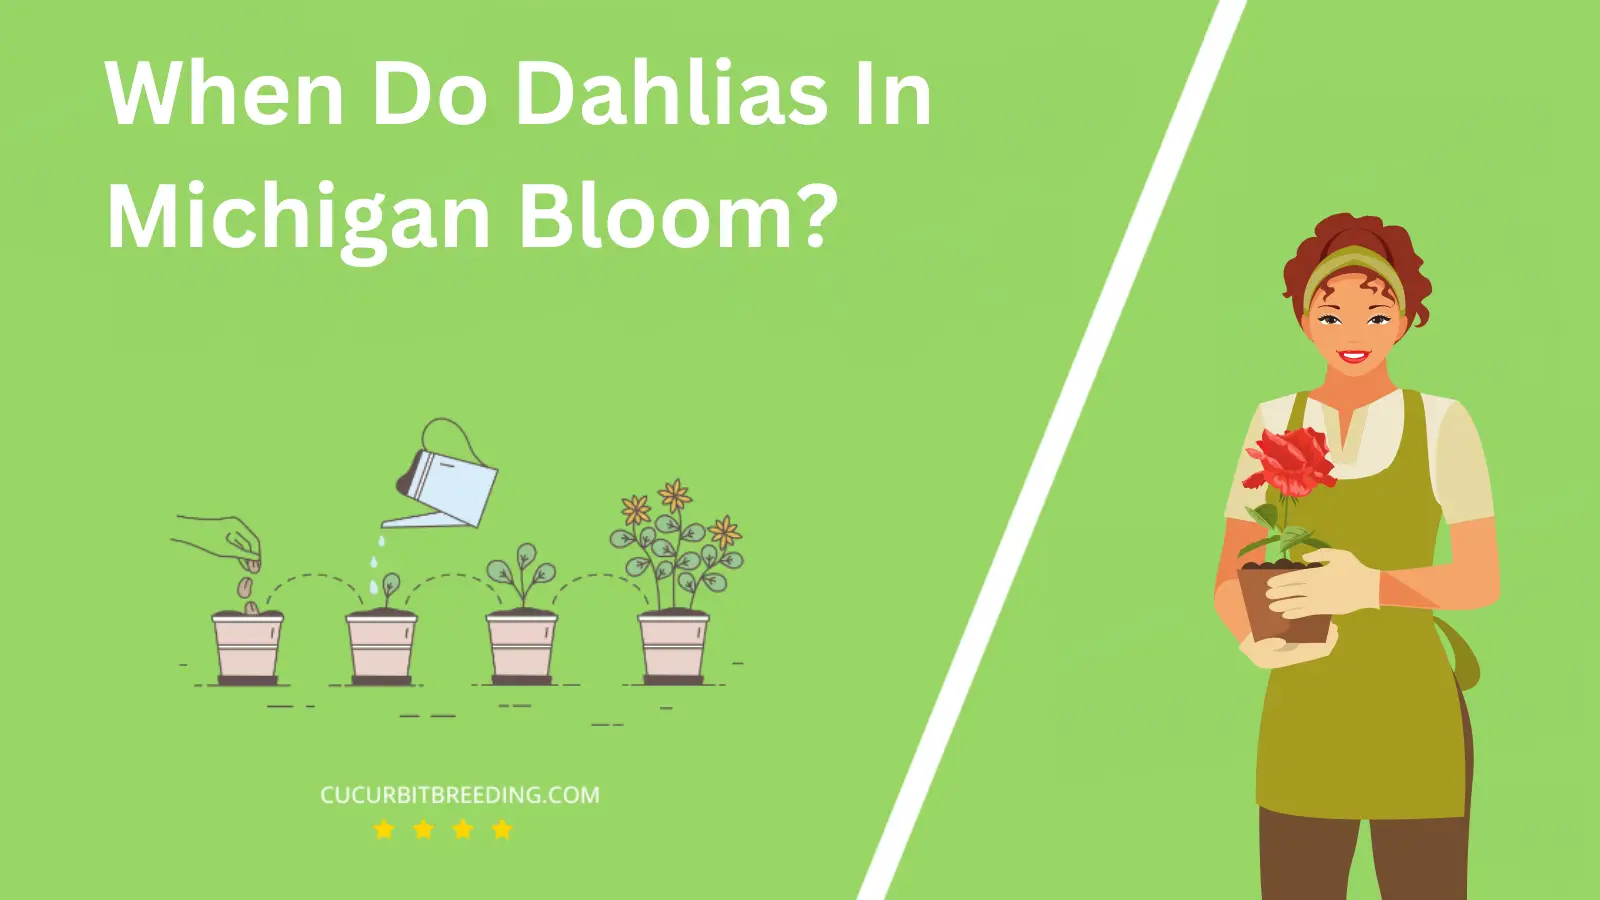 When Do Dahlias In Michigan Bloom?